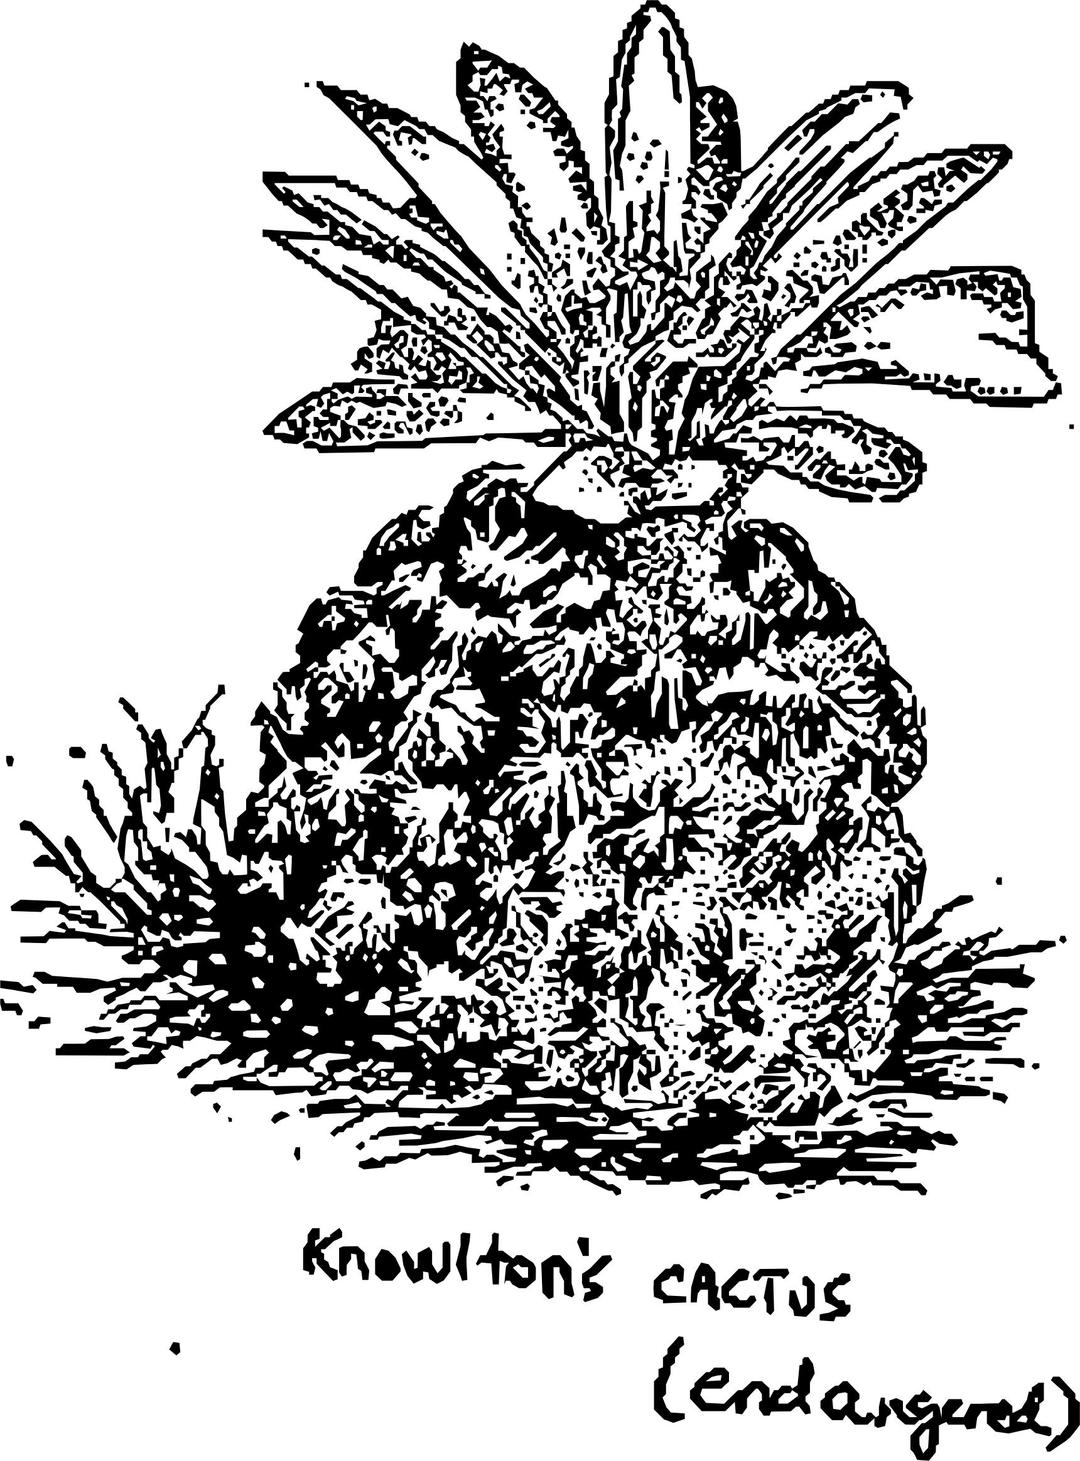 Knowltons Cactus (endangered) png transparent